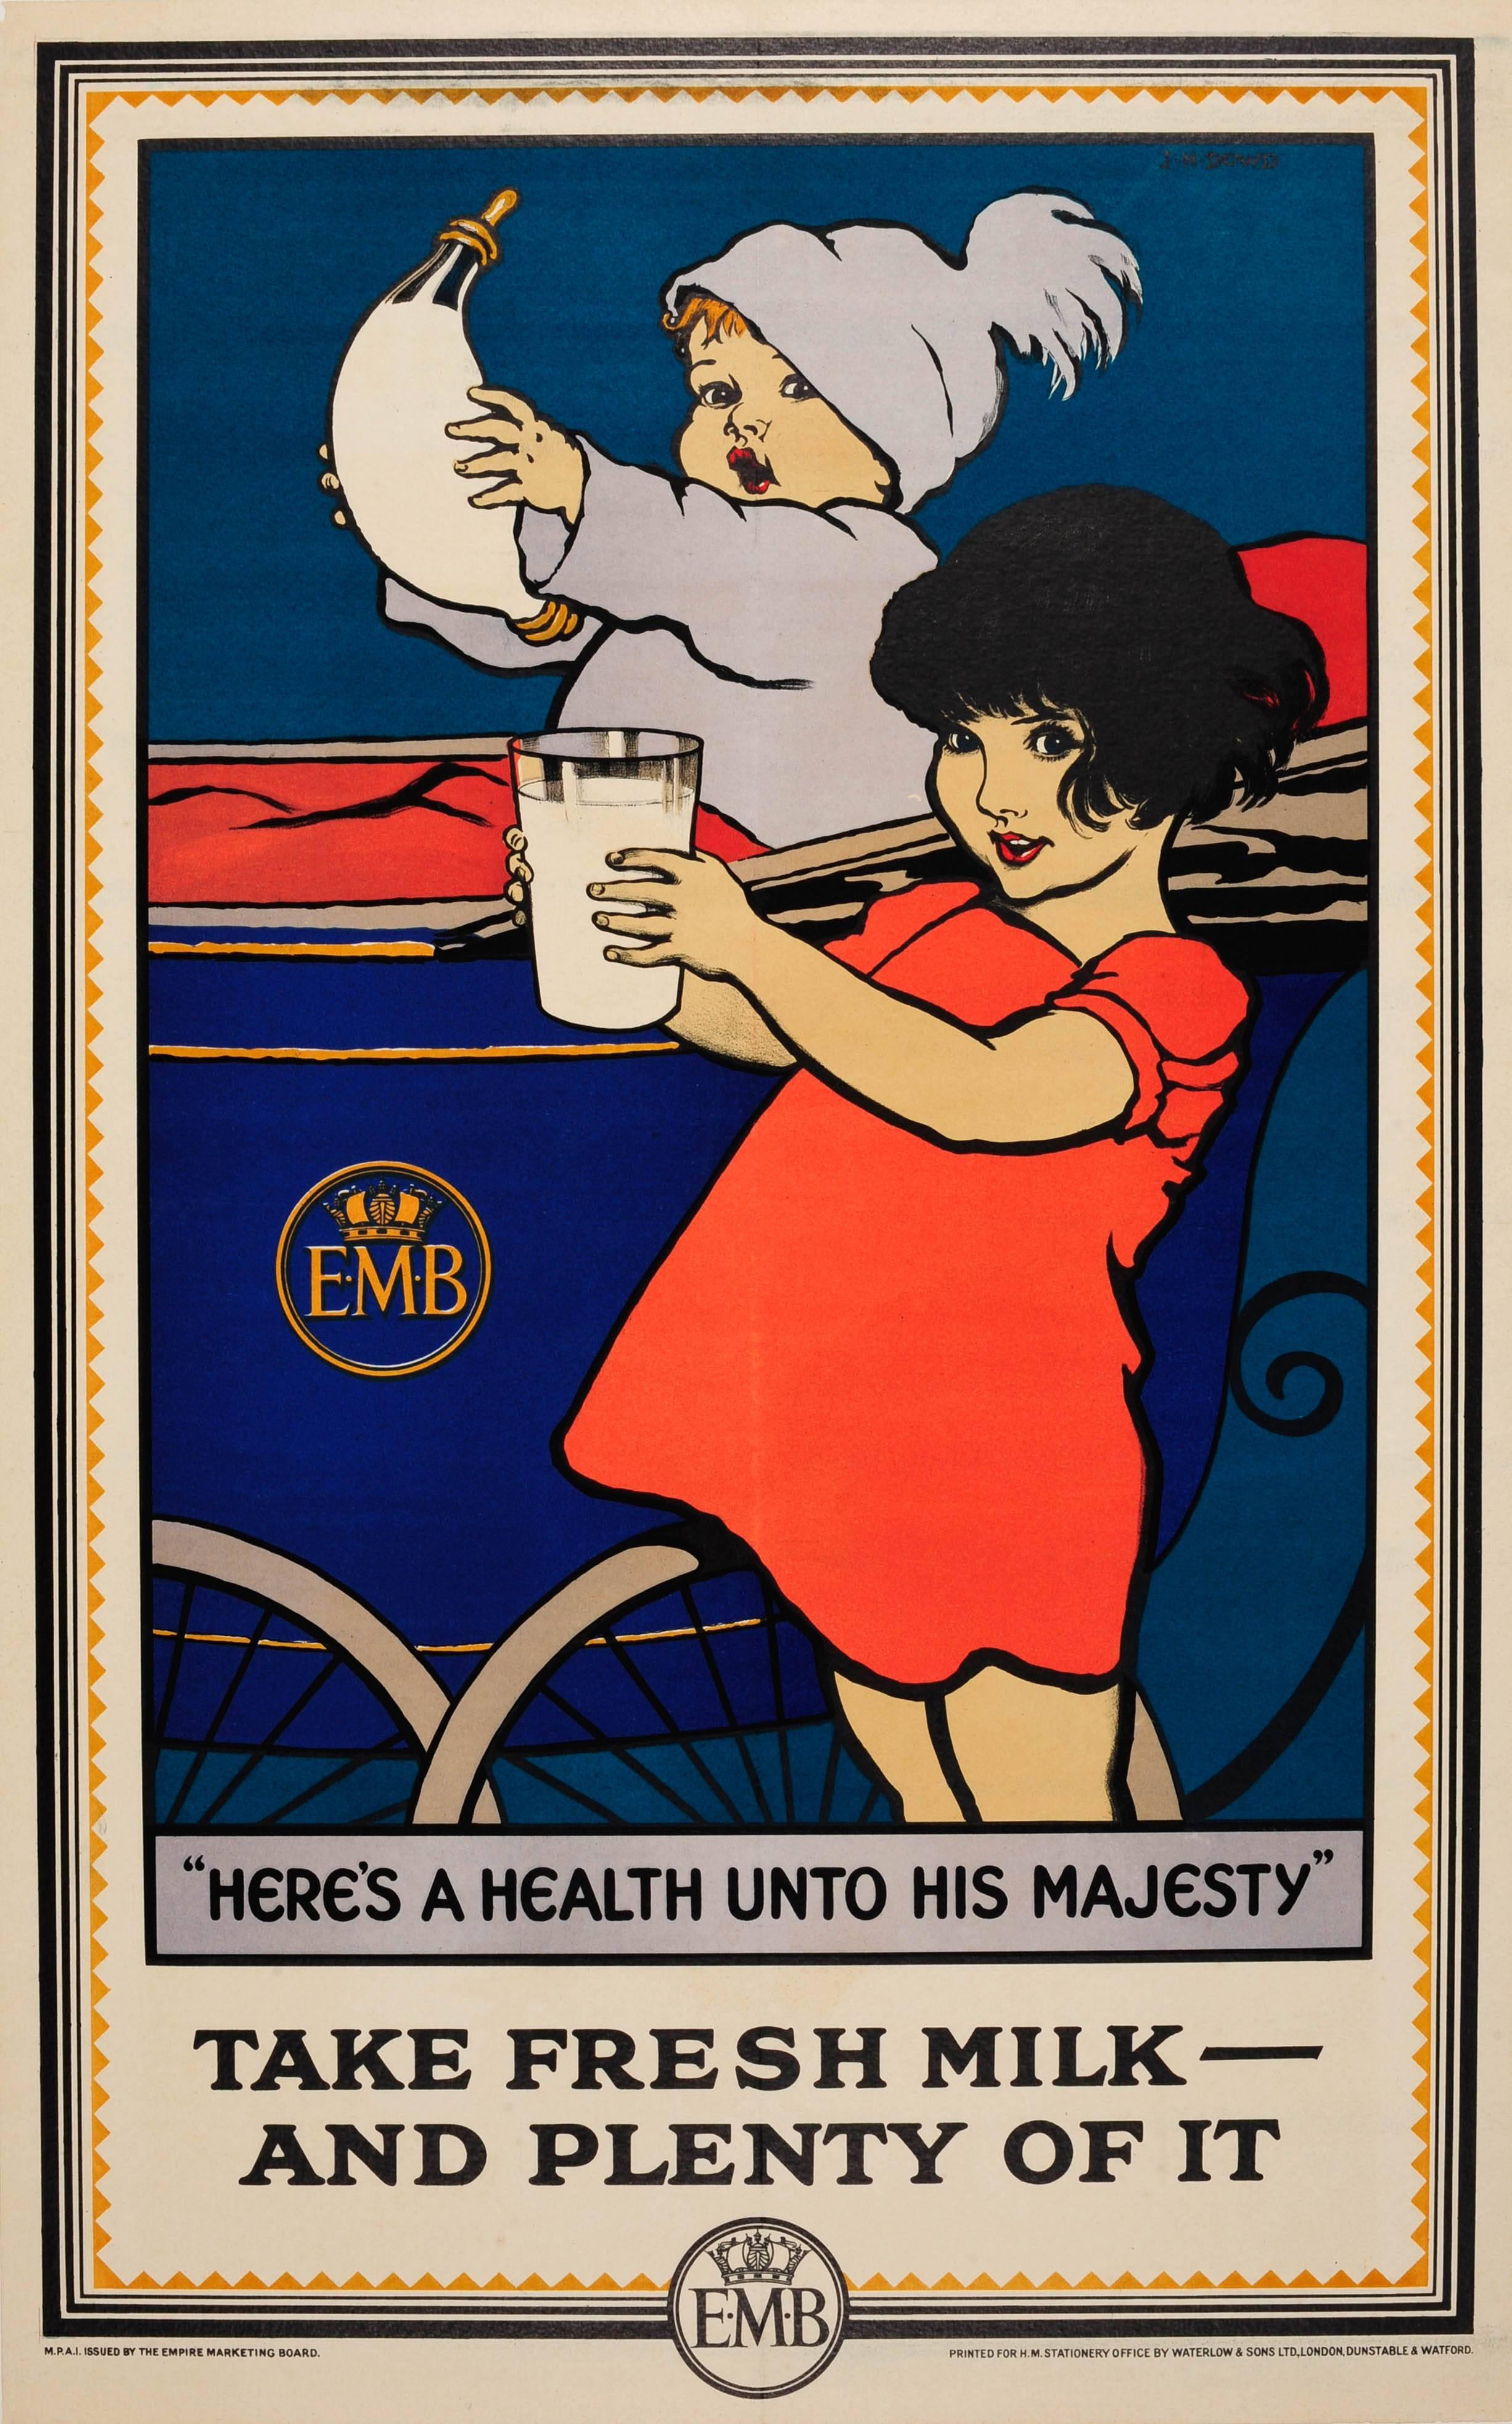 James Henry Dowd Print - Original Empire Marketing Board Poster For Fresh Milk - Health Unto His Majesty